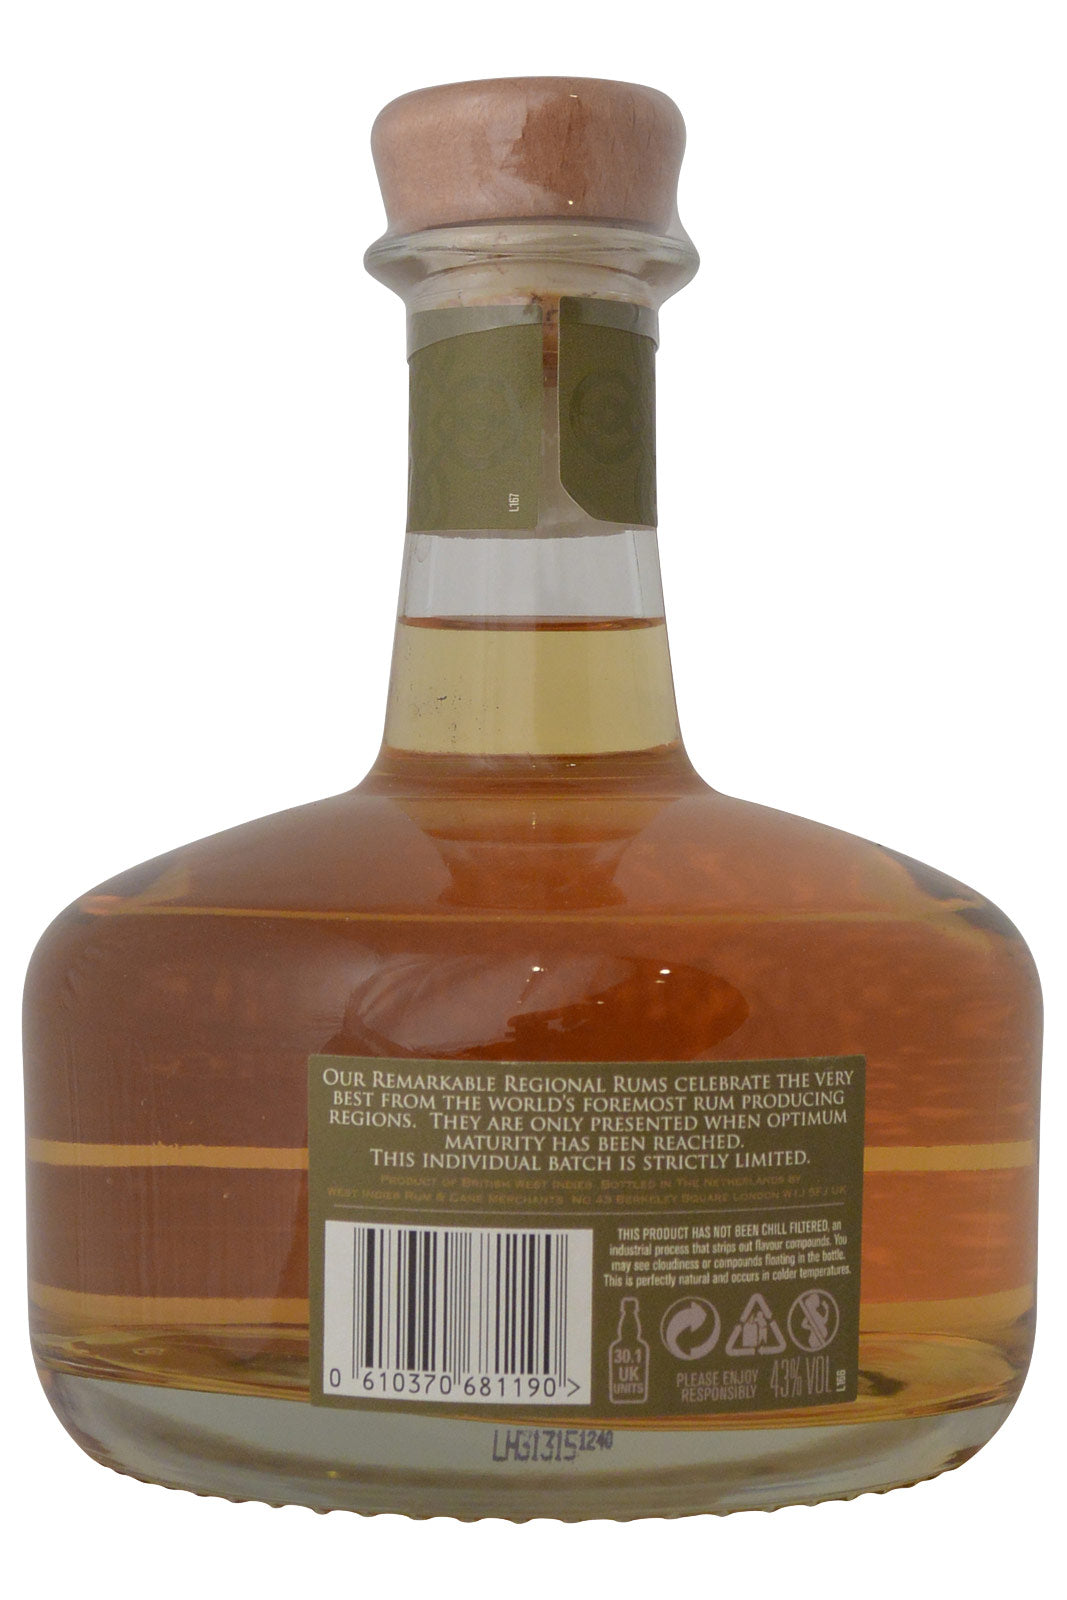 British West Indies Rum XO